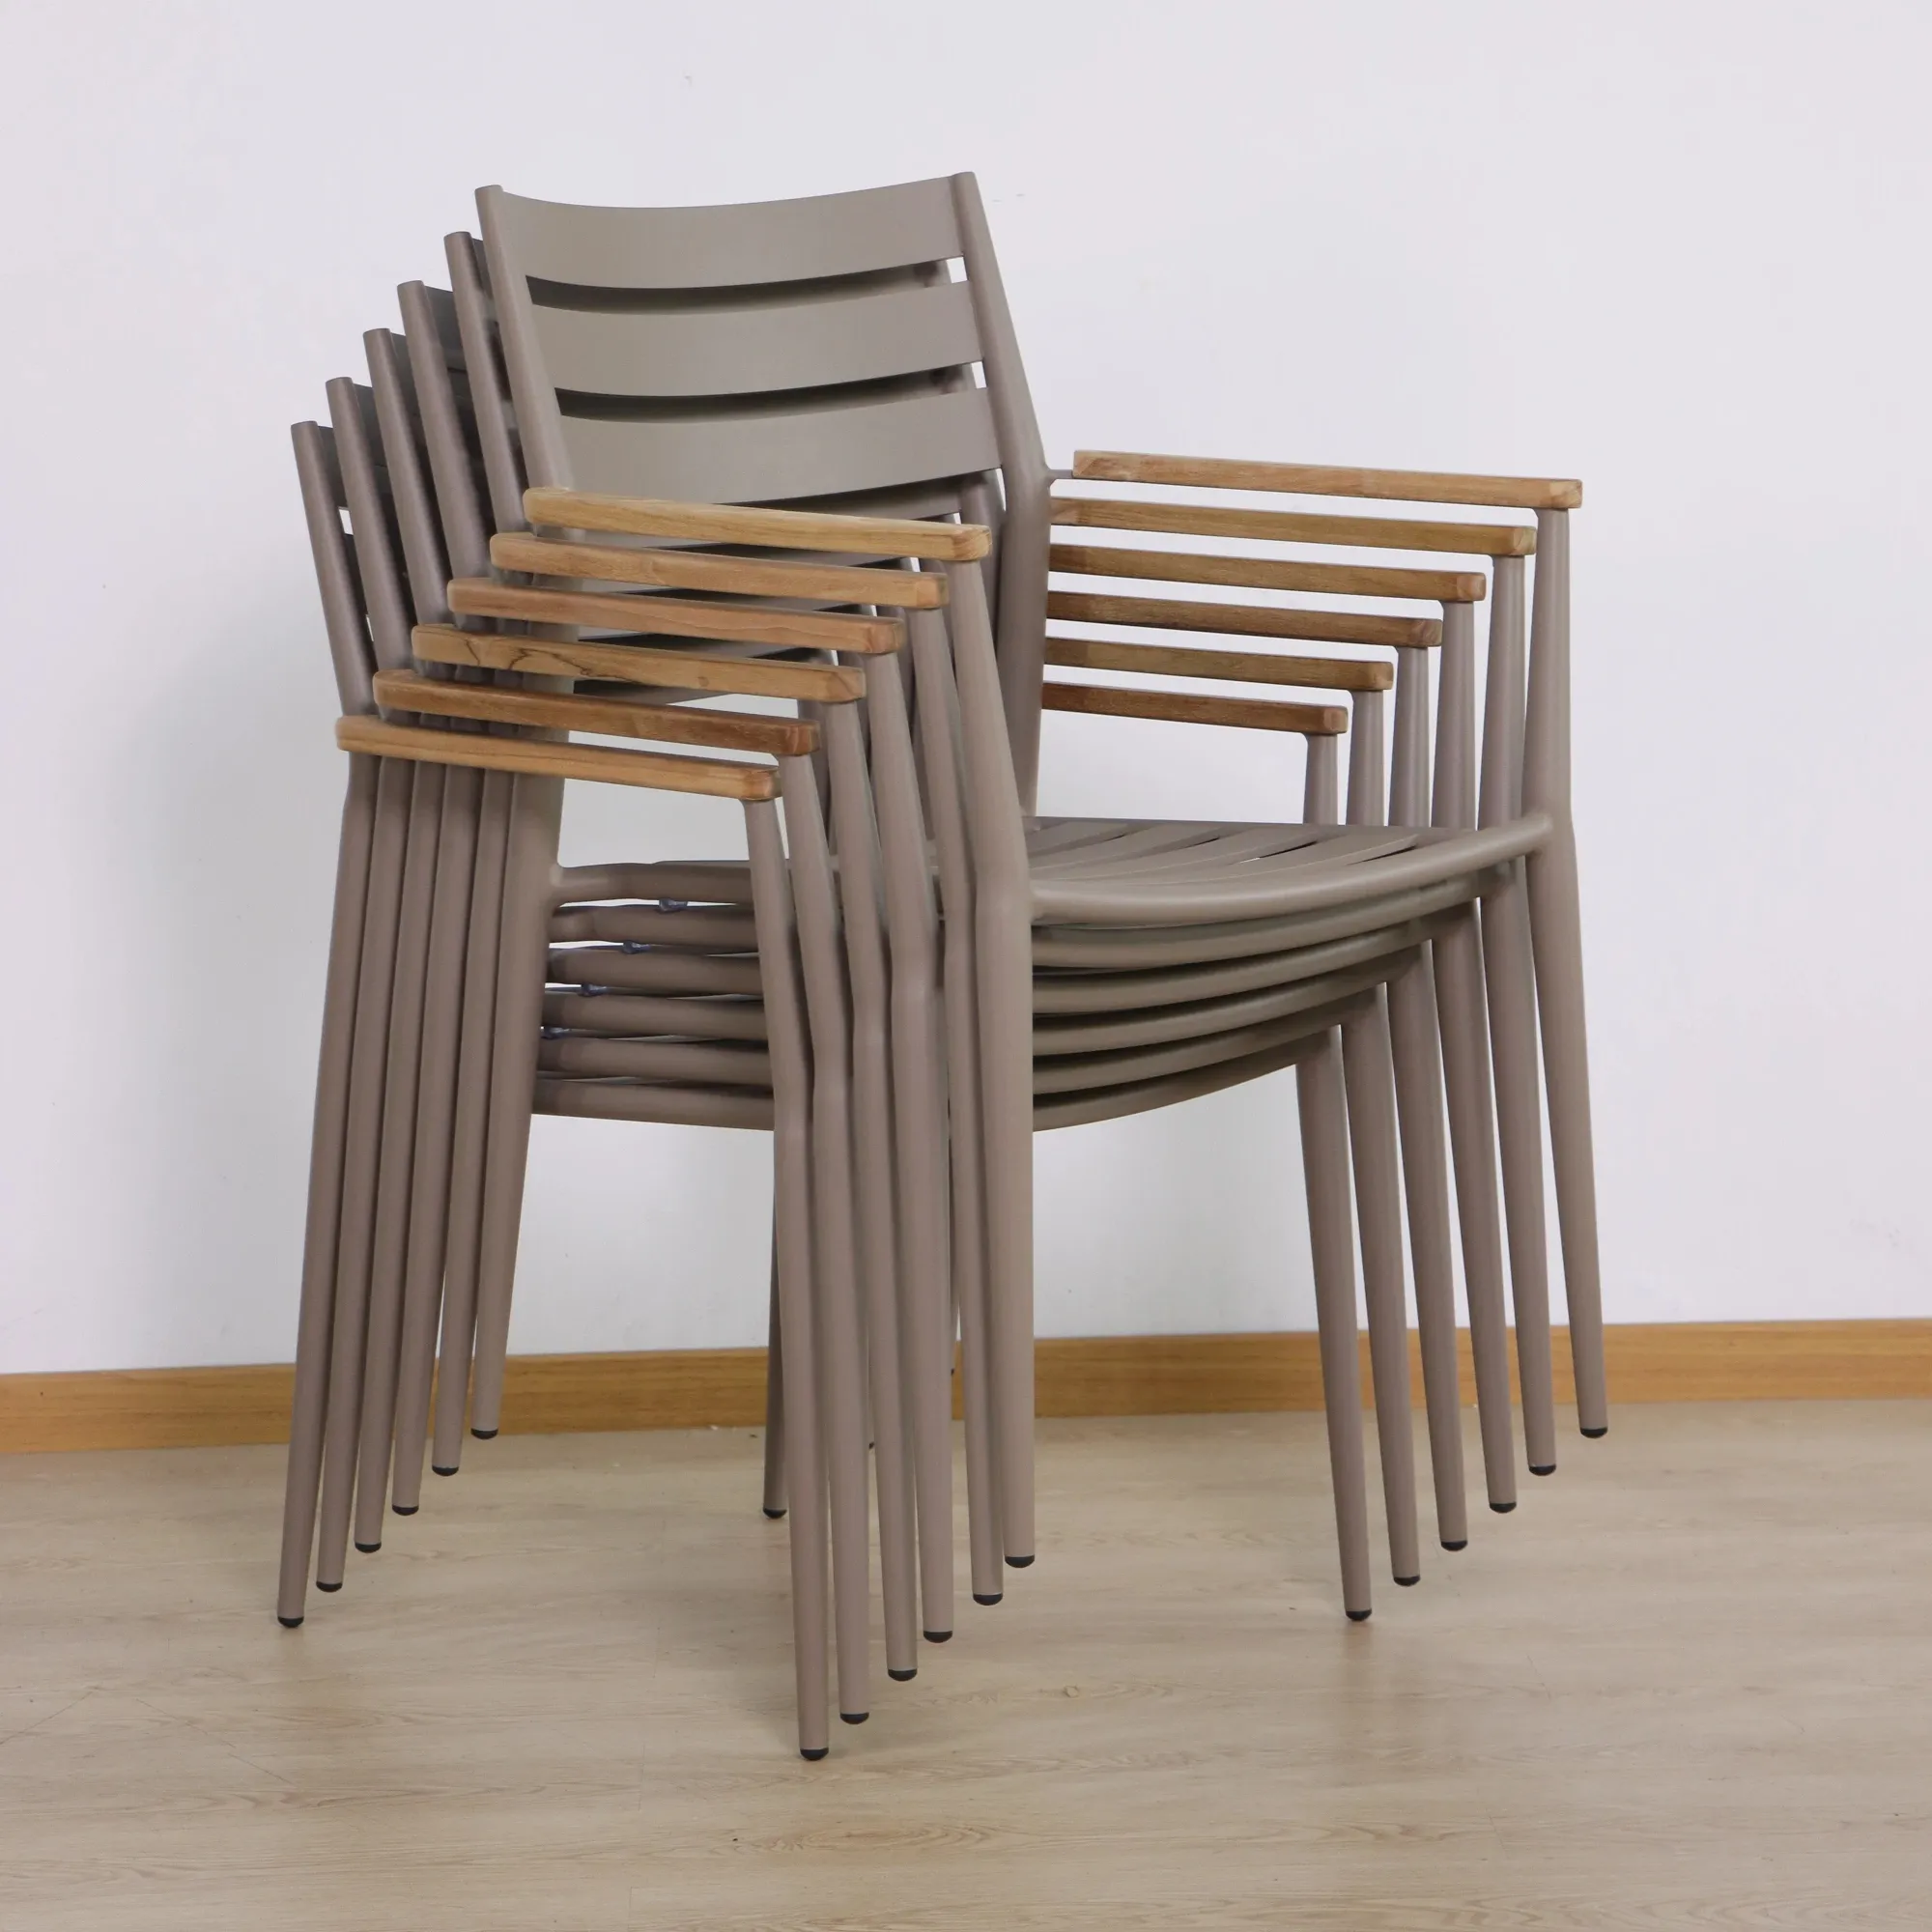 Silla de exterior apilable de aluminio con reposabrazos de madera de teca, cojín impermeable estable, silla de comedor de jardín al por mayor